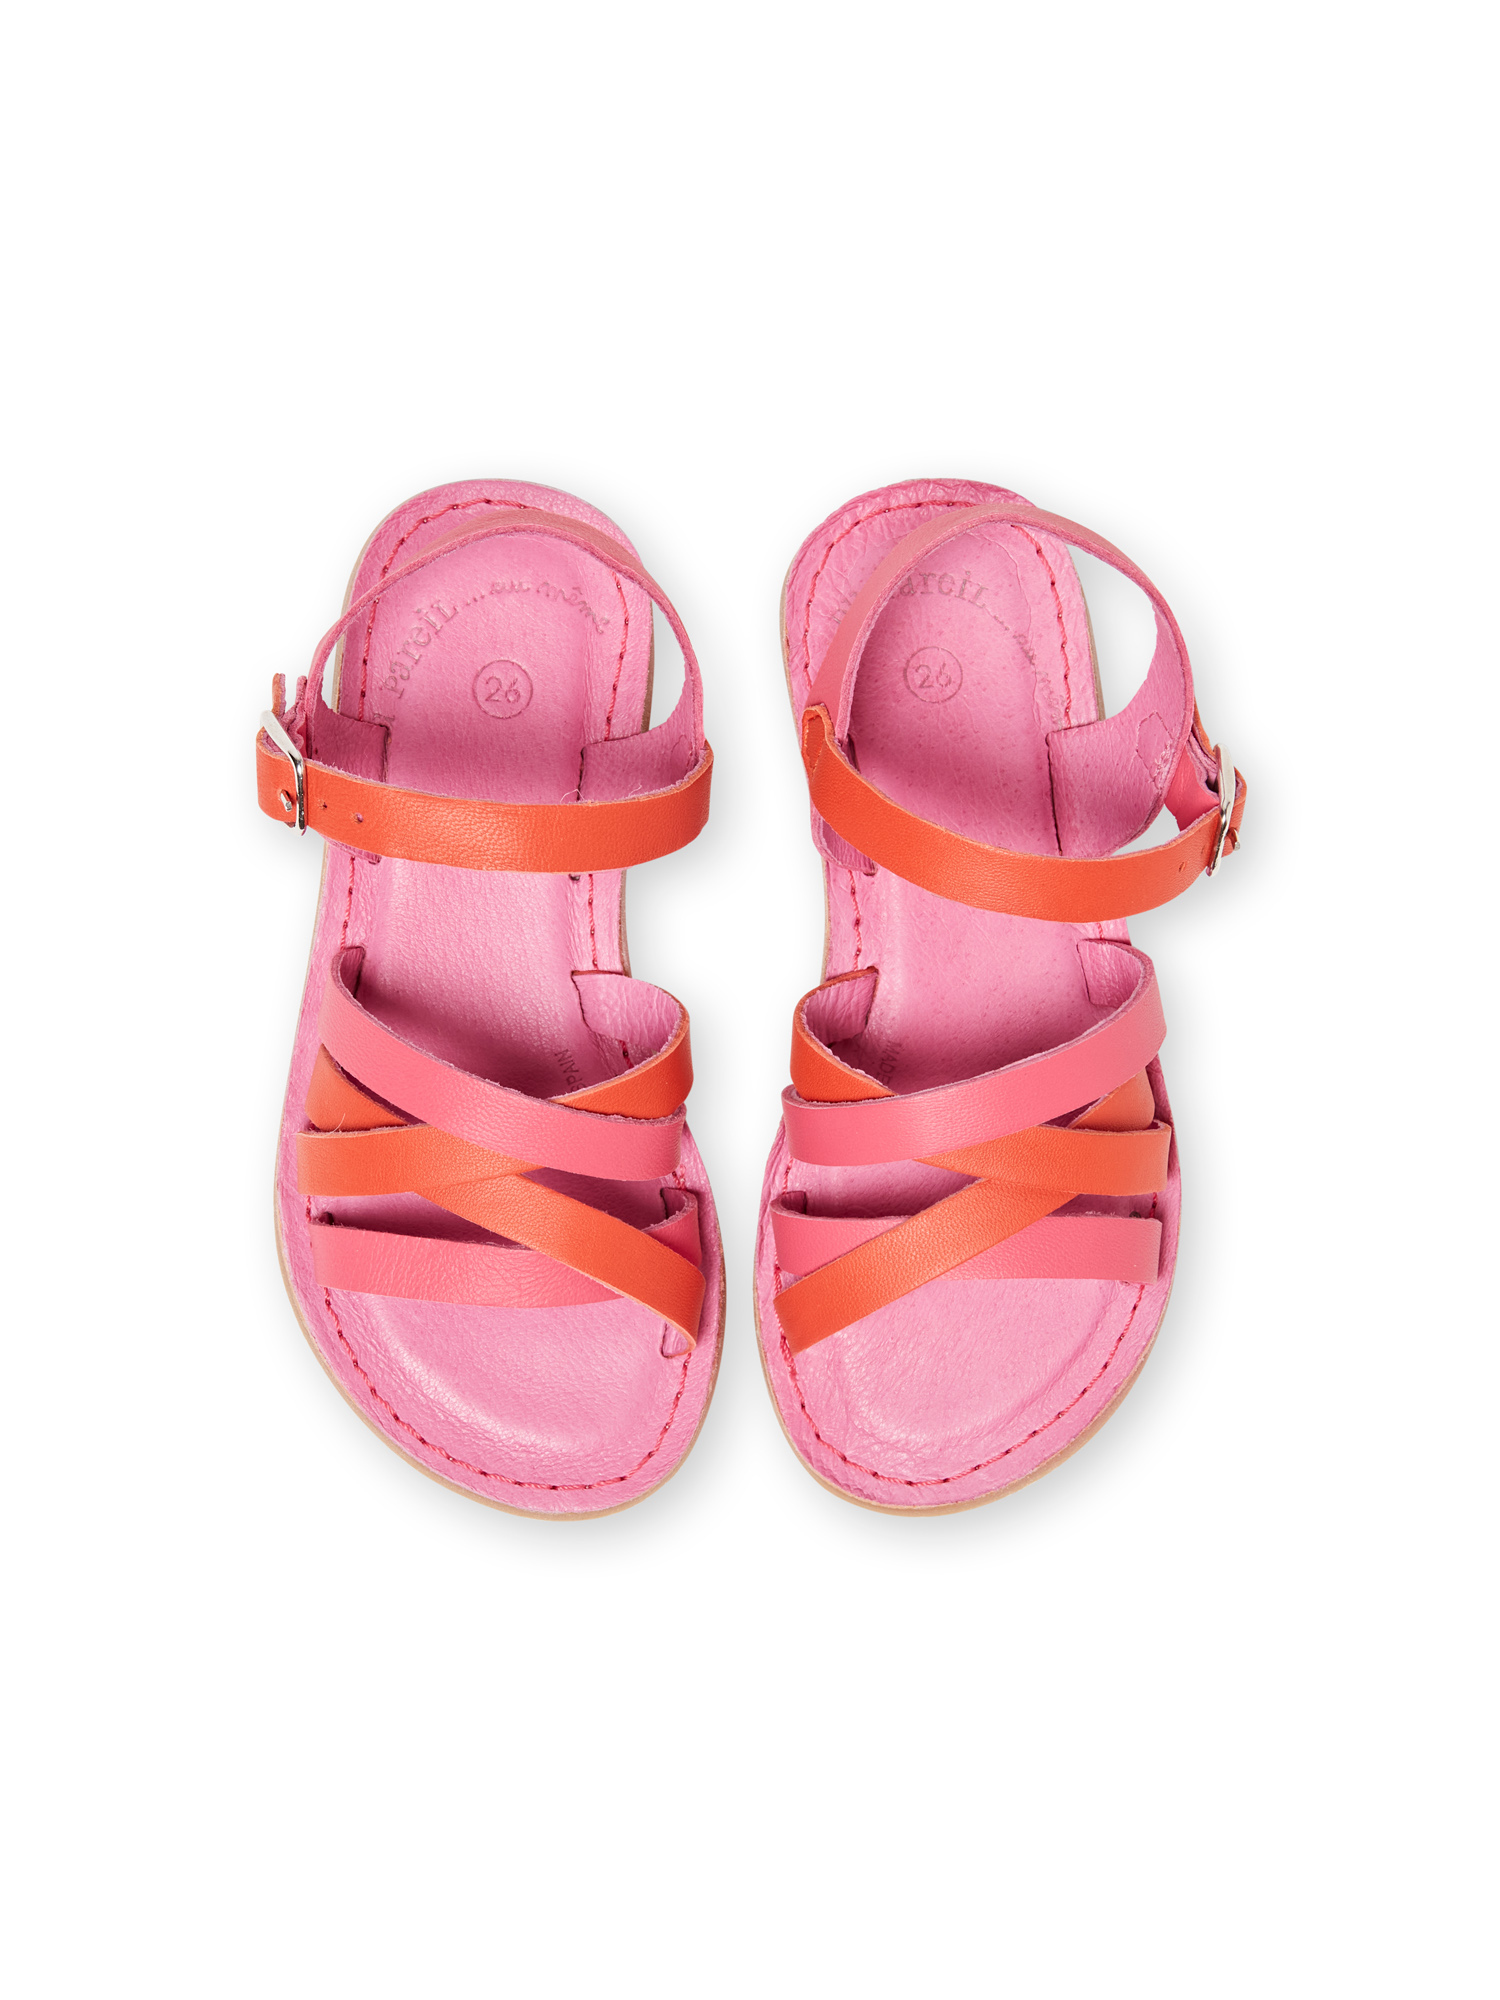 Baby girl pink sandals : buy online - Sandals | DPAM International Website